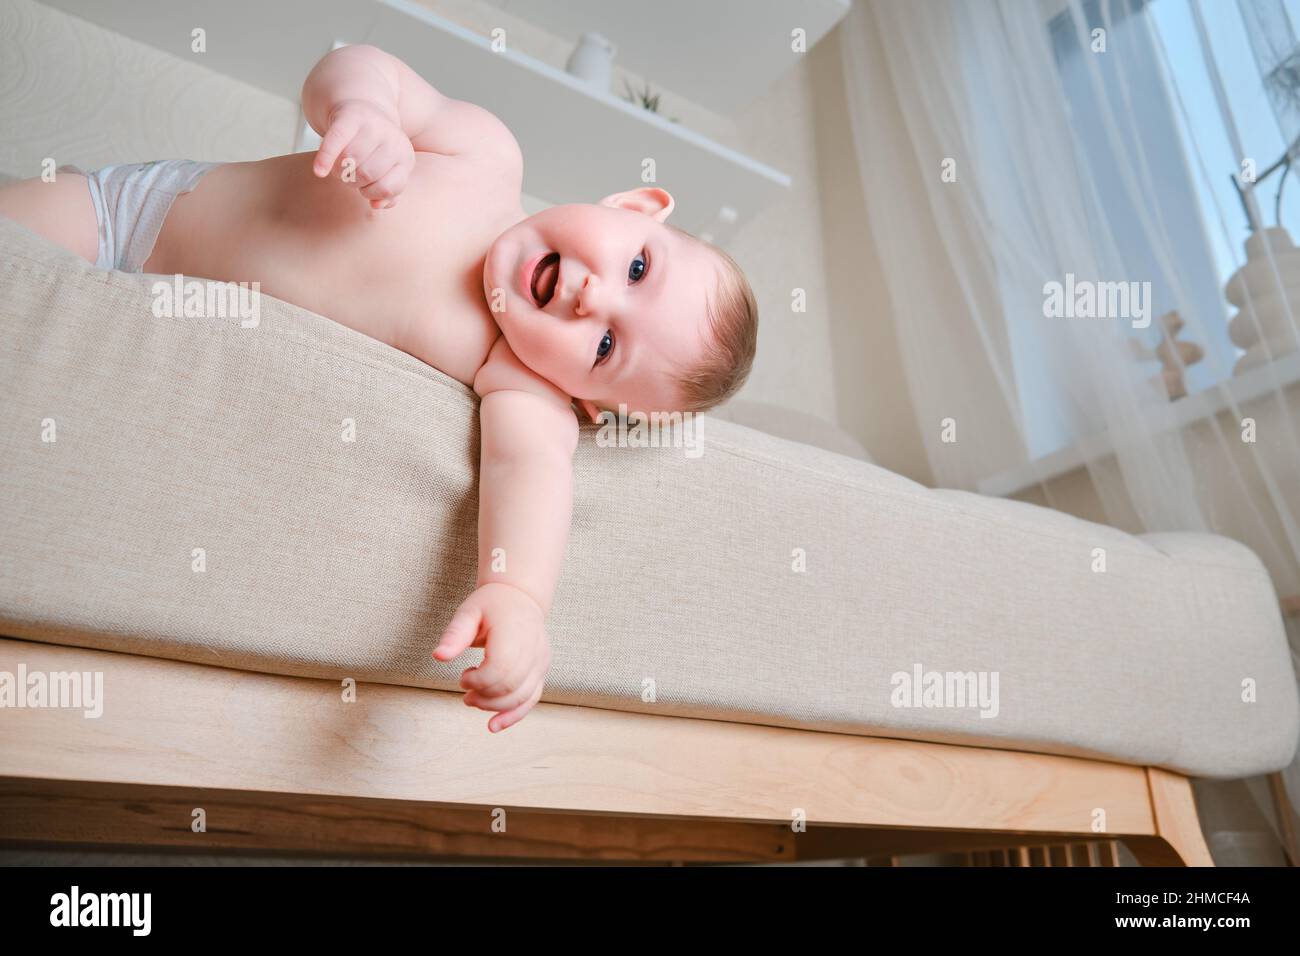 Toddler Diaper Indoor Banque D Image Et Photos Alamy